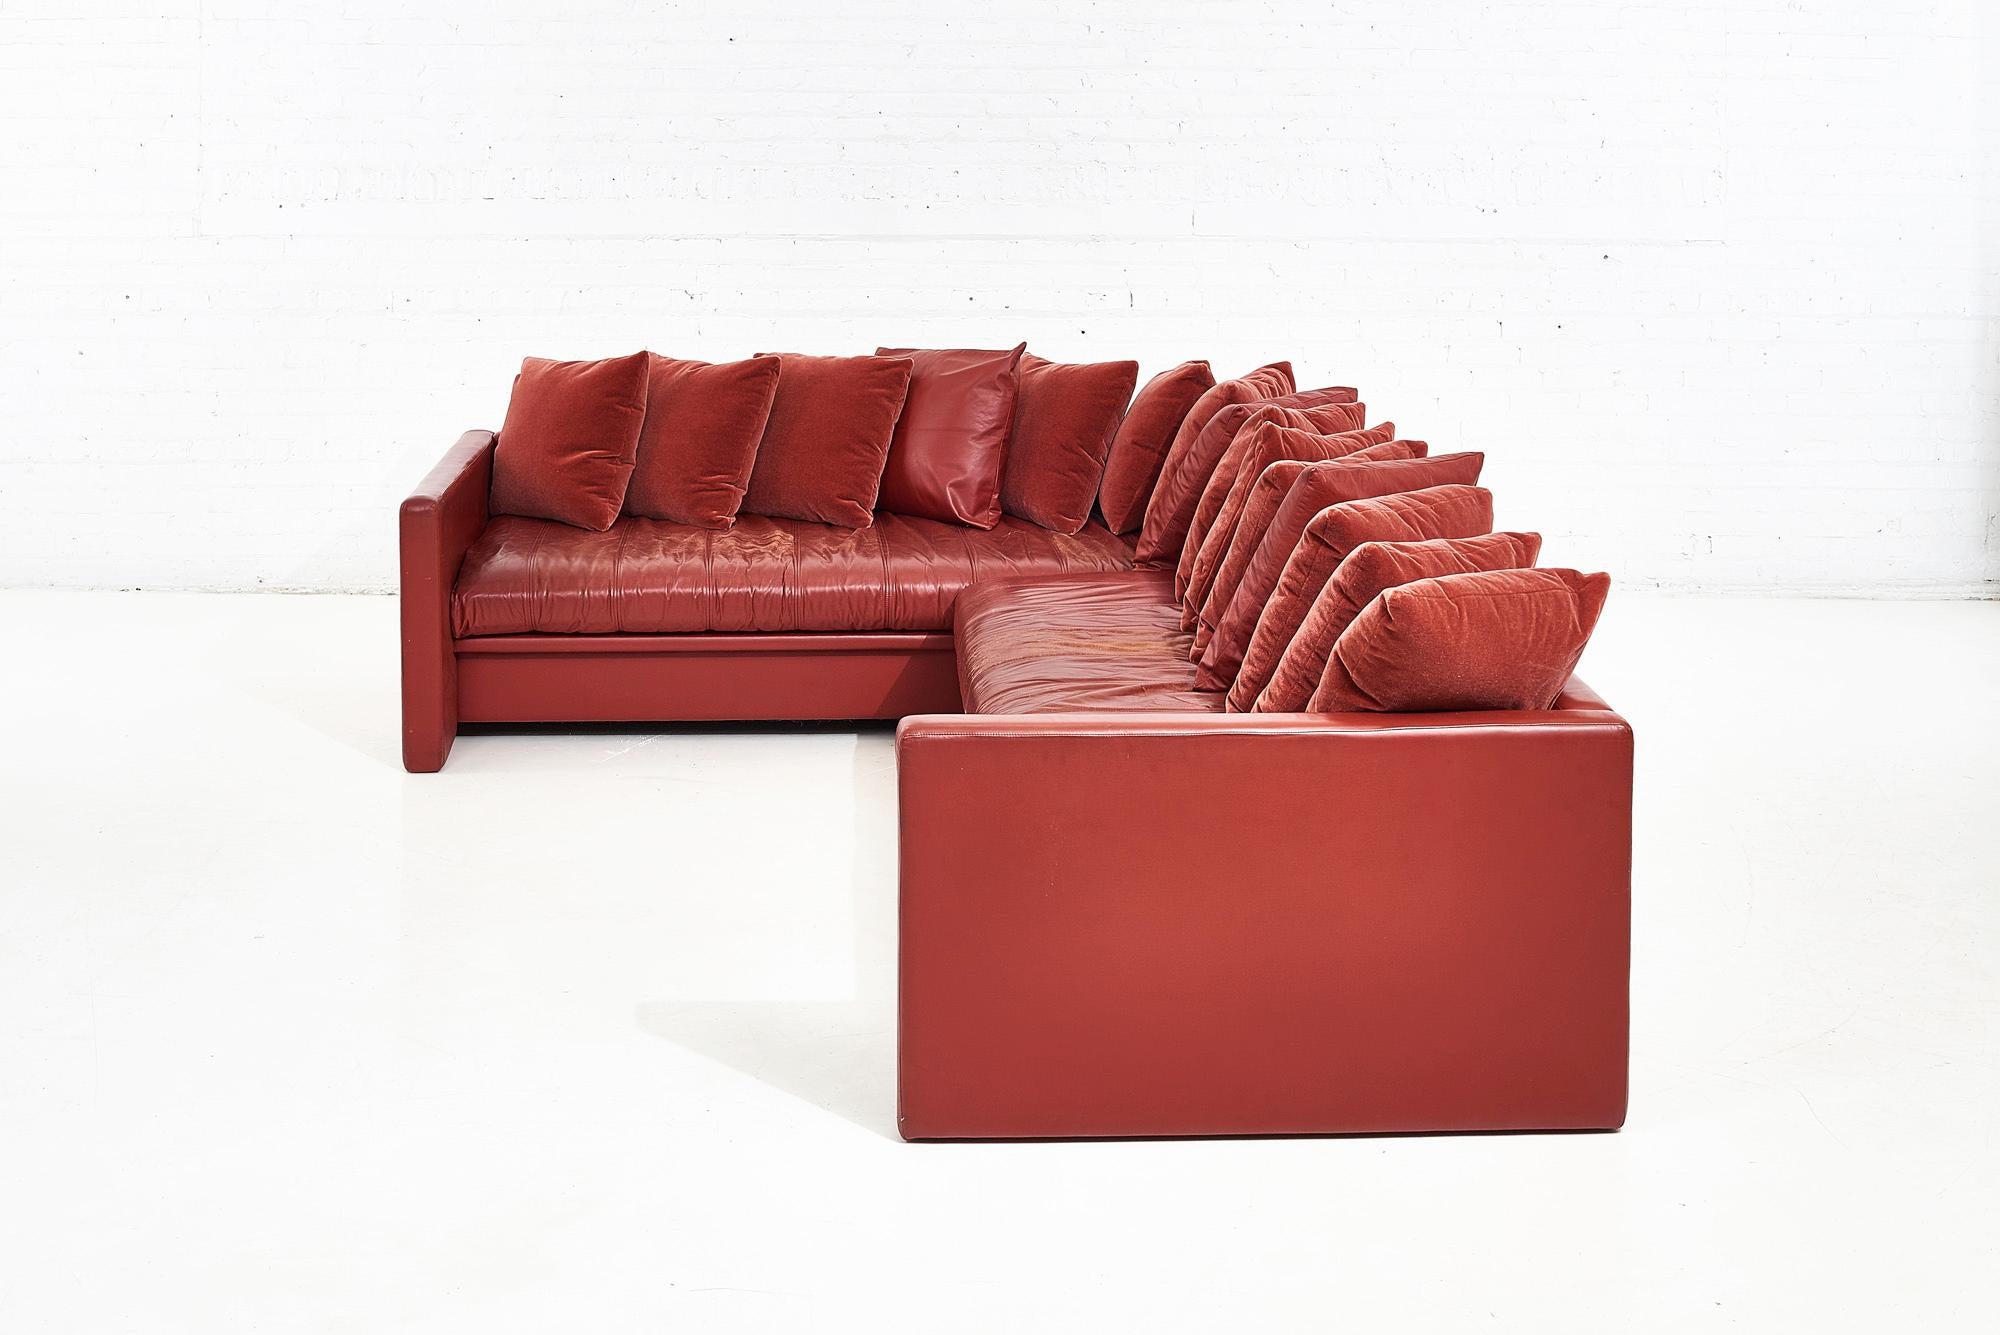 Joseph D'Urso Leder-Sofa mit Modulen, Knoll, 1980 (Ende des 20. Jahrhunderts) im Angebot